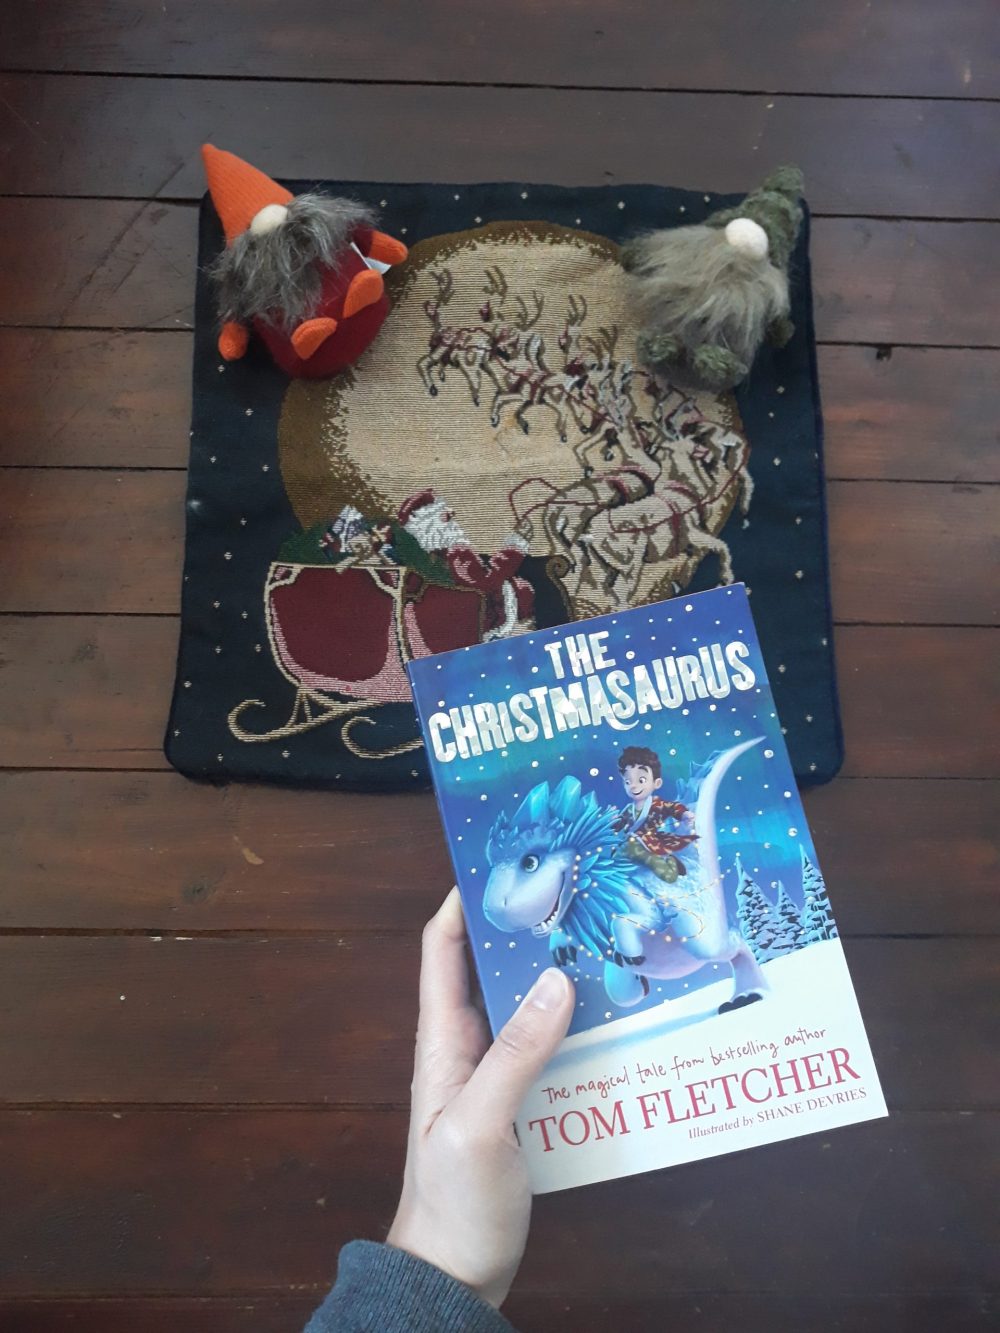 Boekrecensie: The Christmasaurus – Tom Fletcher